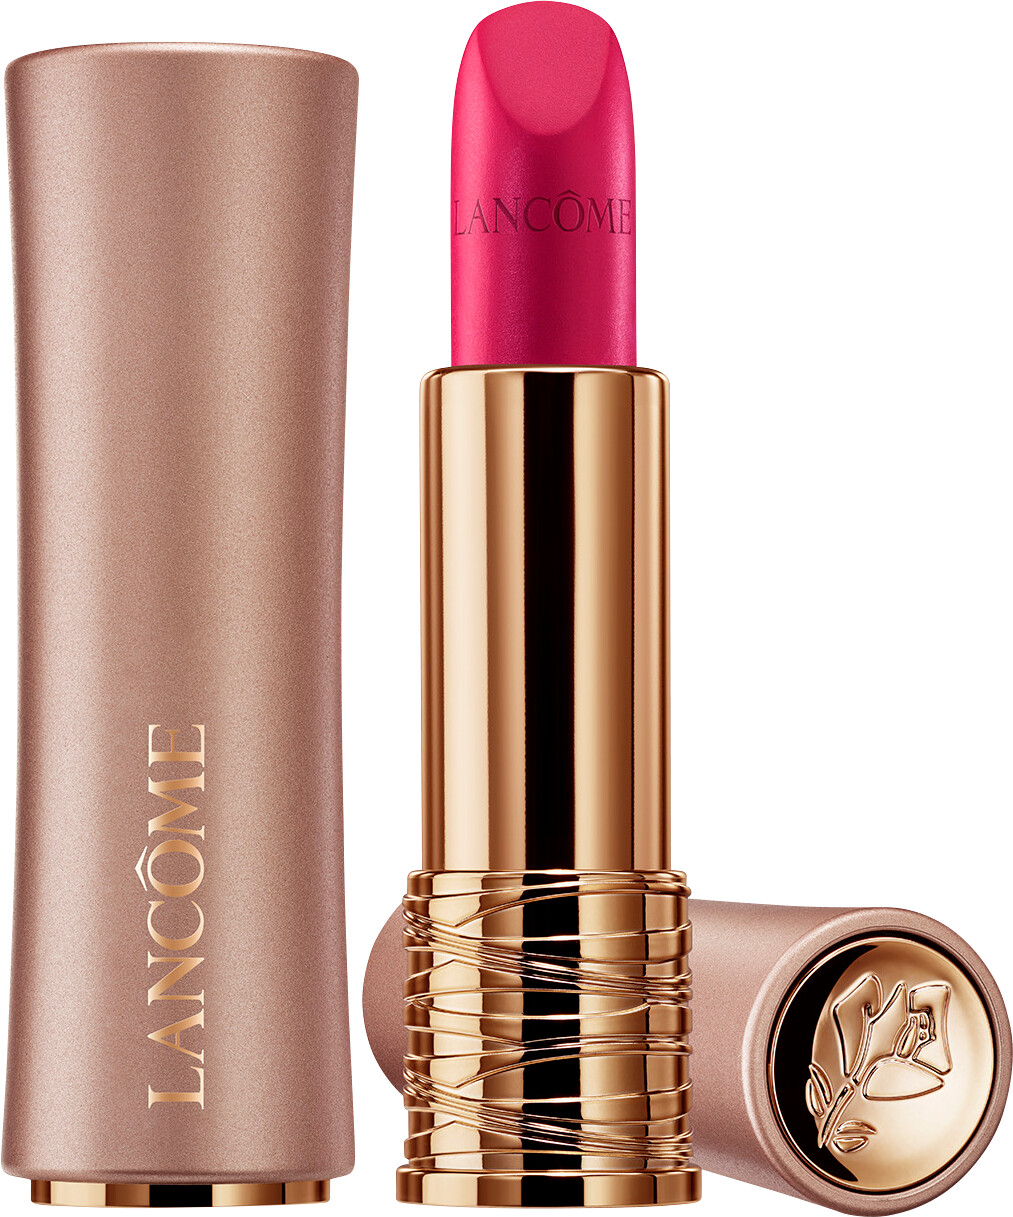 Lancome L'Absolu Rouge Intimatte Soft Matte Lipstick 3.4g 388 - Rose Lancome